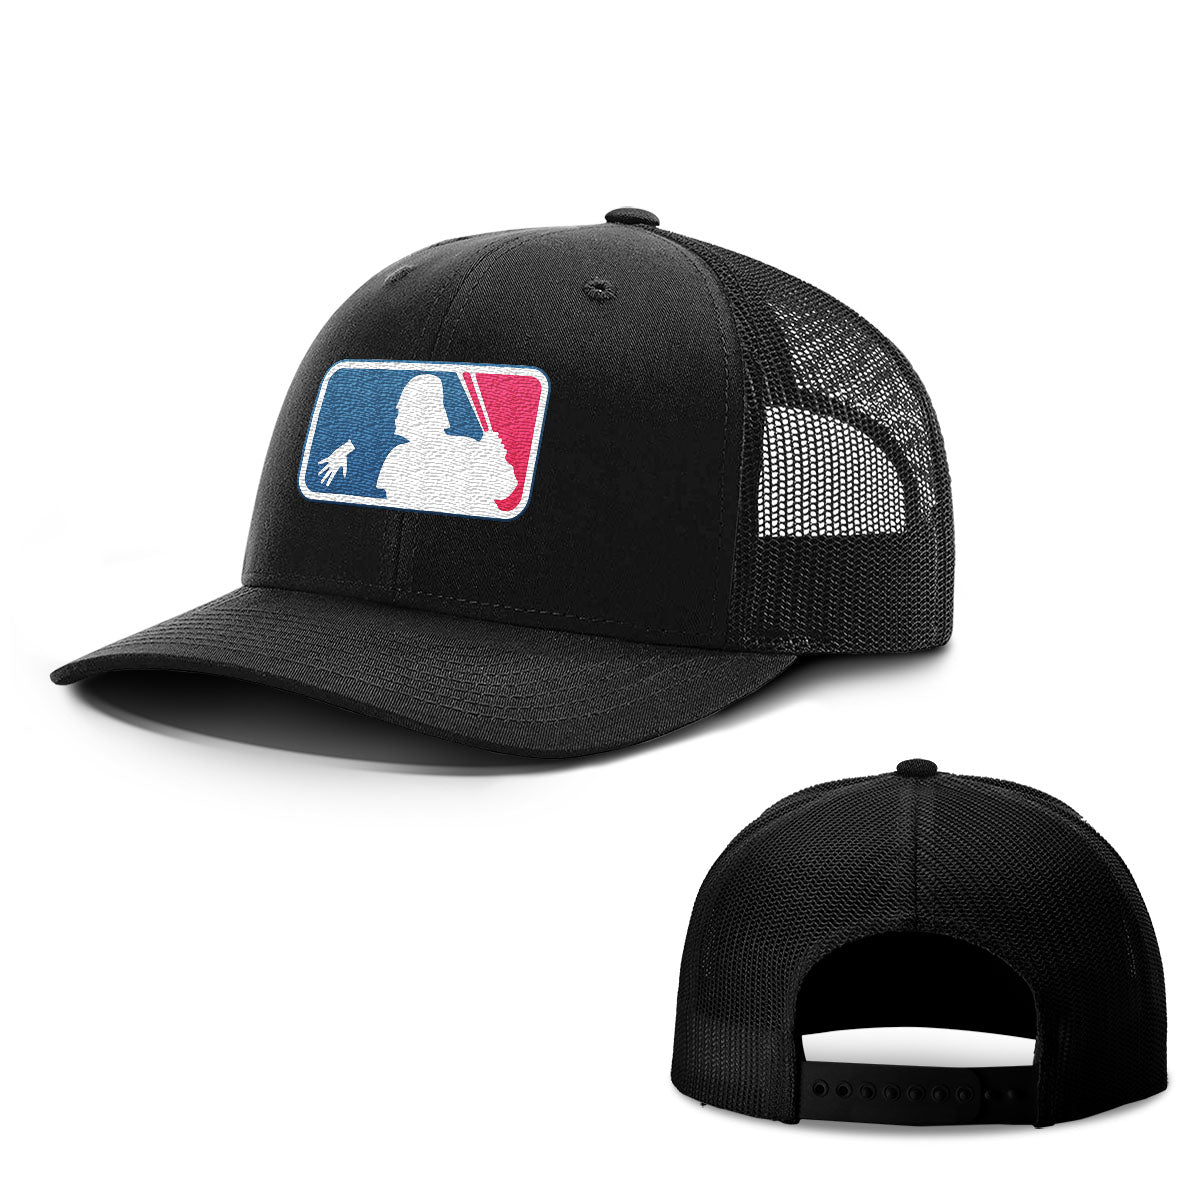 Funny Baseball Hats - BustedTees.com